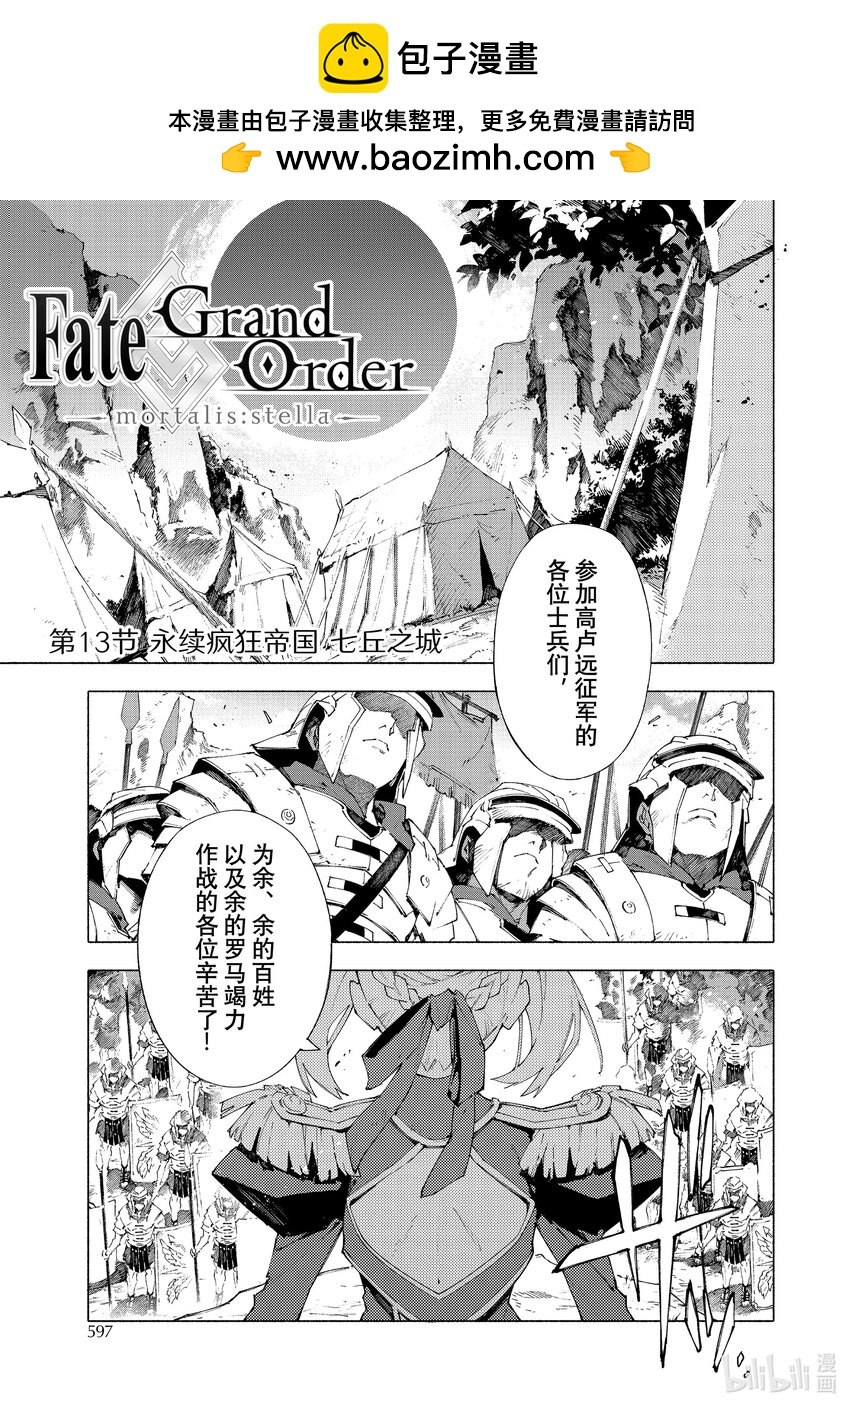 Fate/Grand Order -mortalis:stella- - 13-1 永續瘋狂帝國 七丘之城 - 1